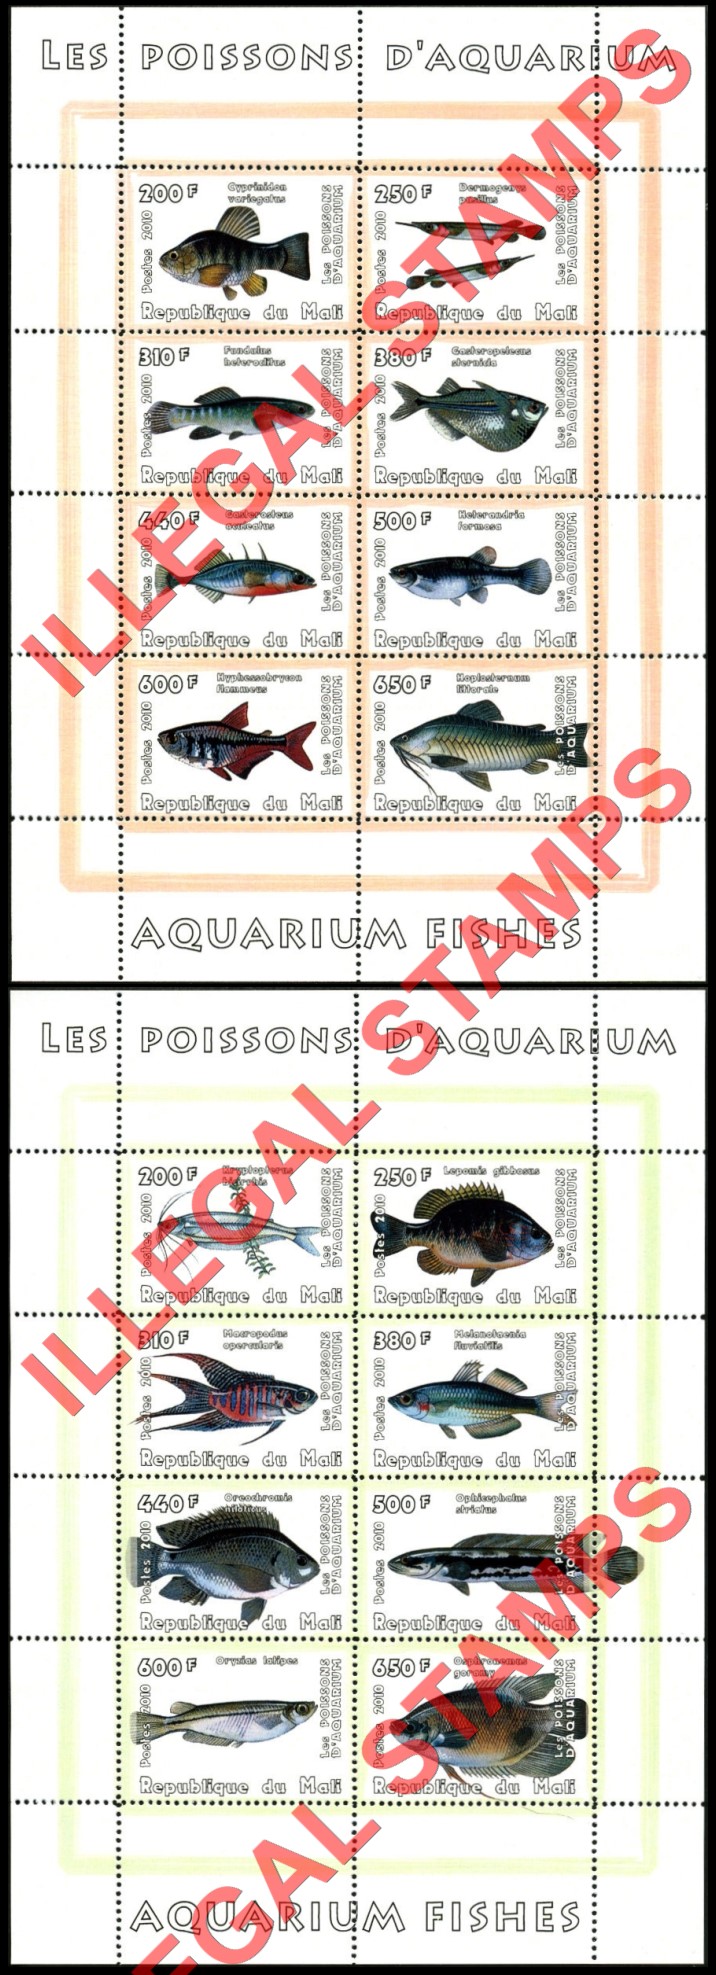 Mali 2010 Fish Aquarium Illegal Stamp Sheetlets of 8 (Part 2)